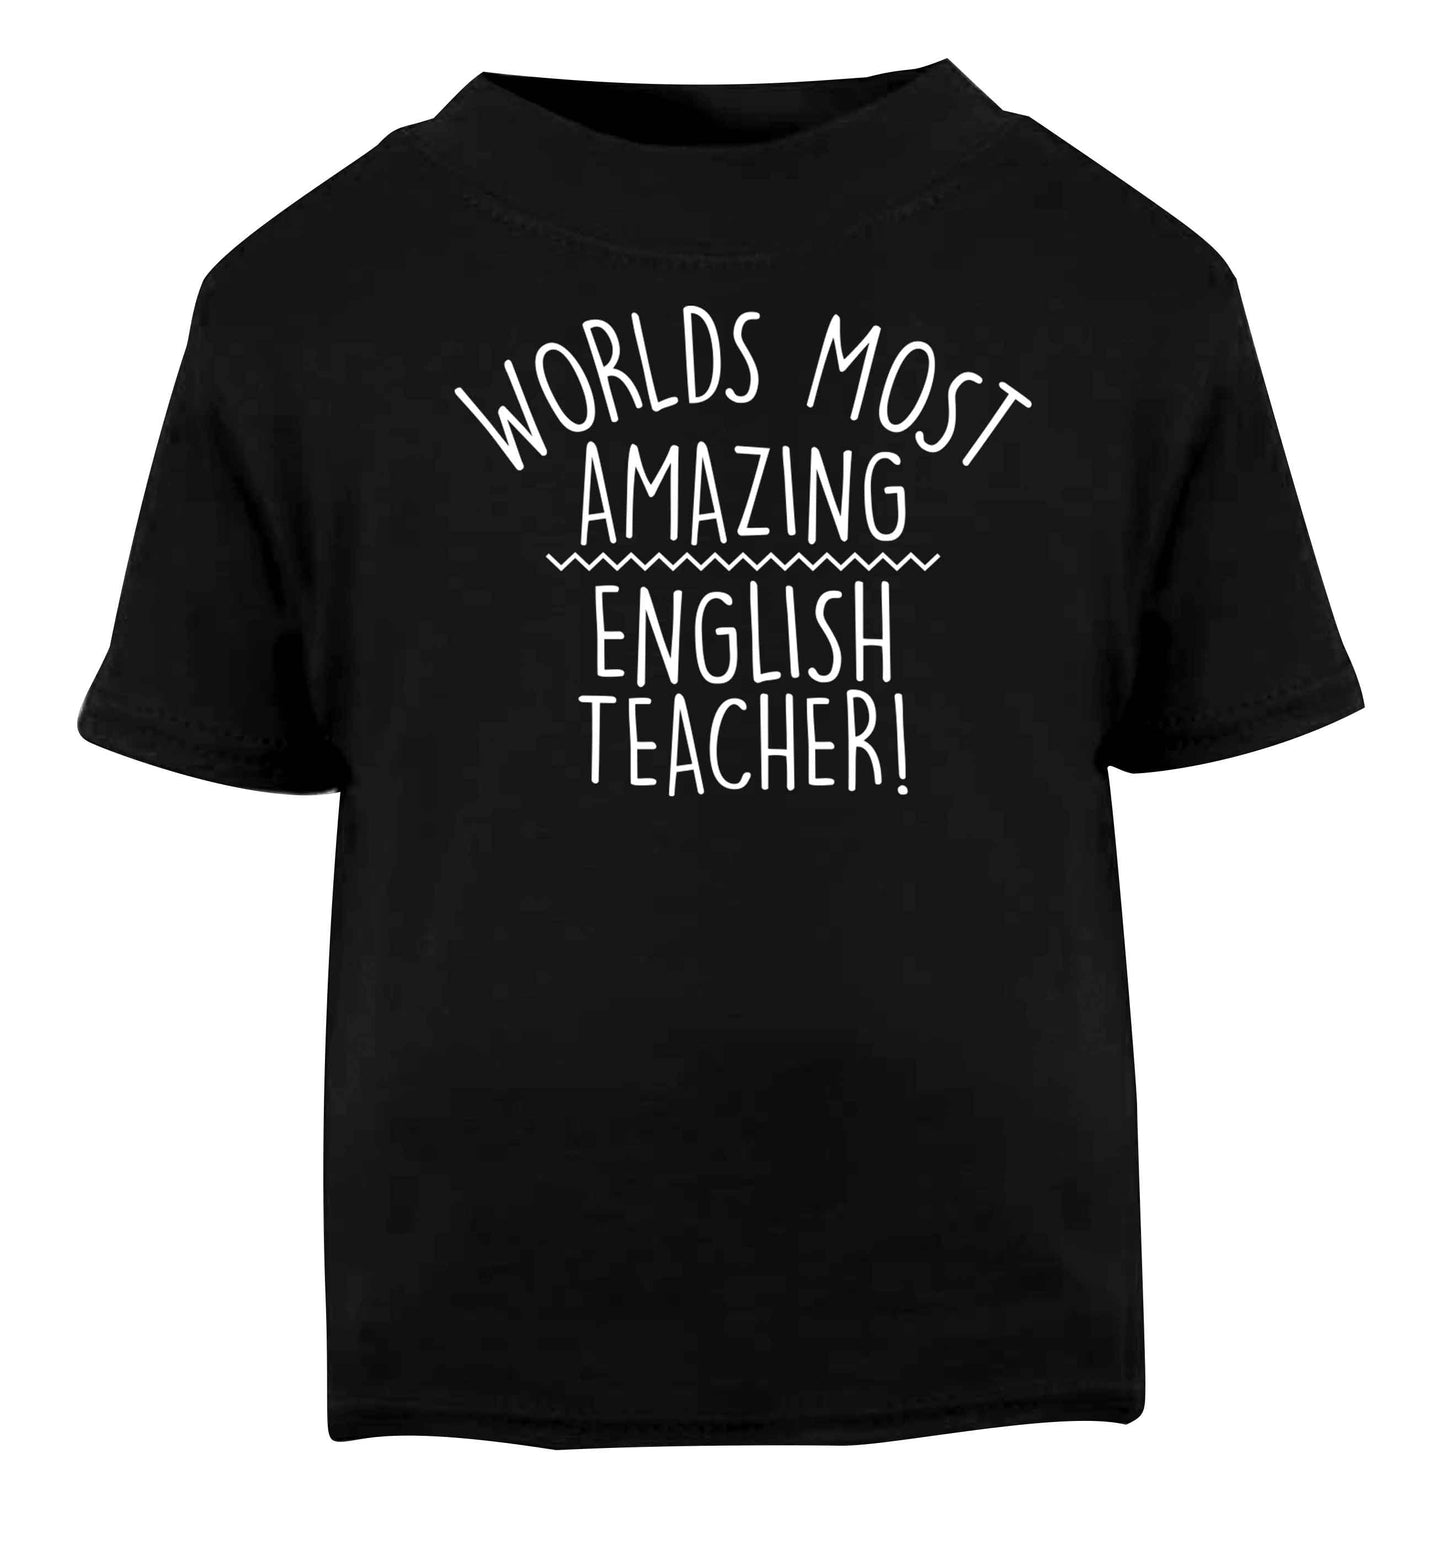 Worlds most amazing English teacher Black baby toddler Tshirt 2 years